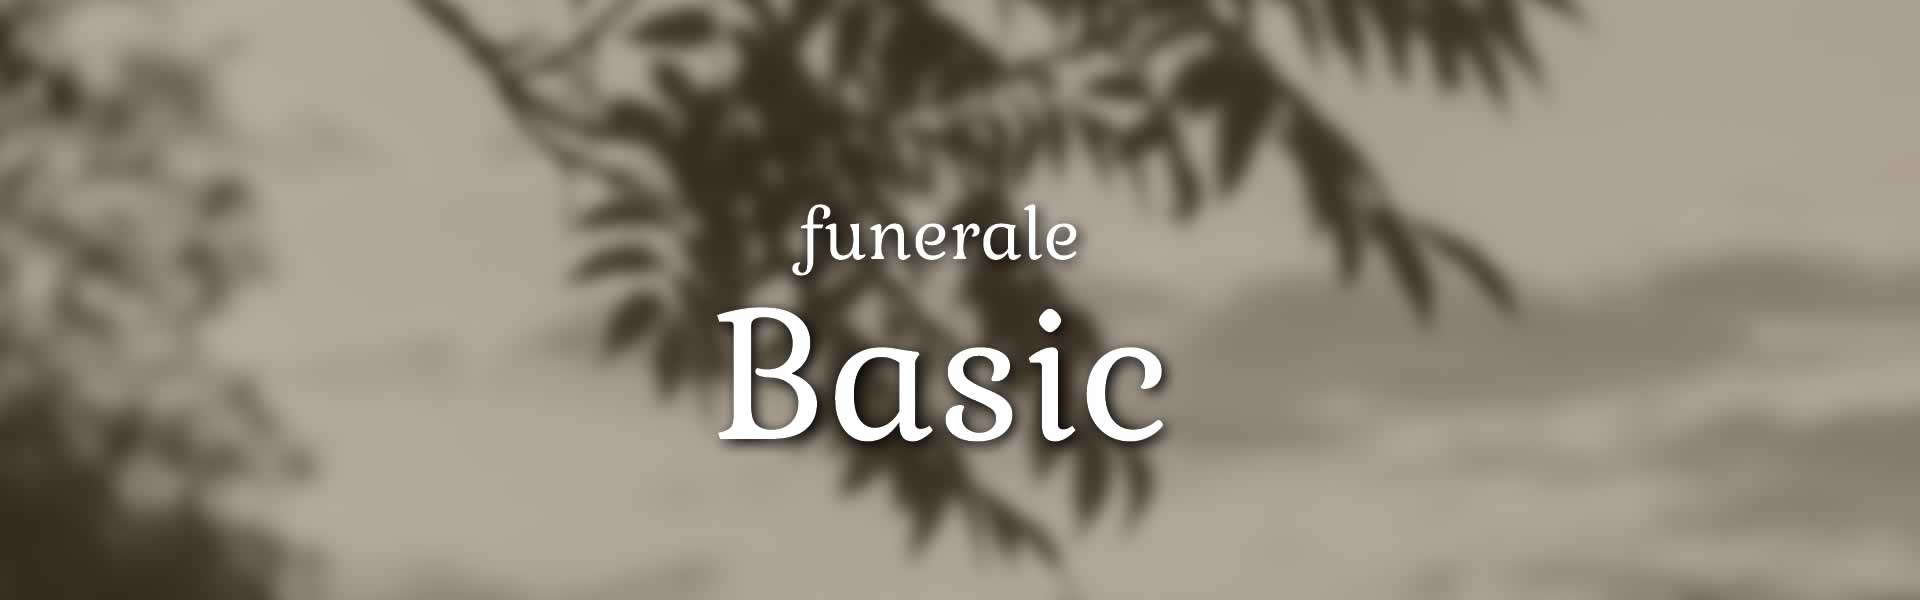 Prezzi funerali basic